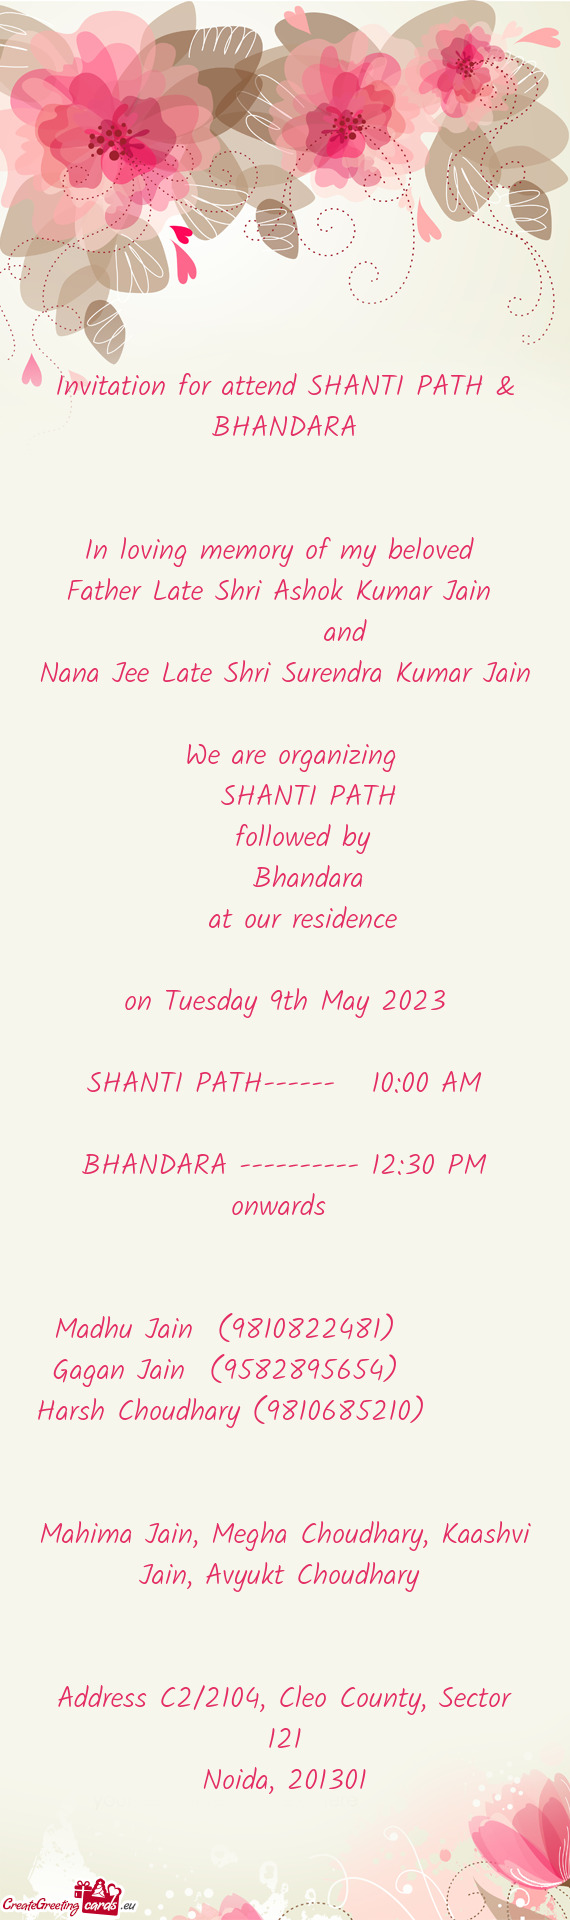 Invitation for attend SHANTI PATH & BHANDARA